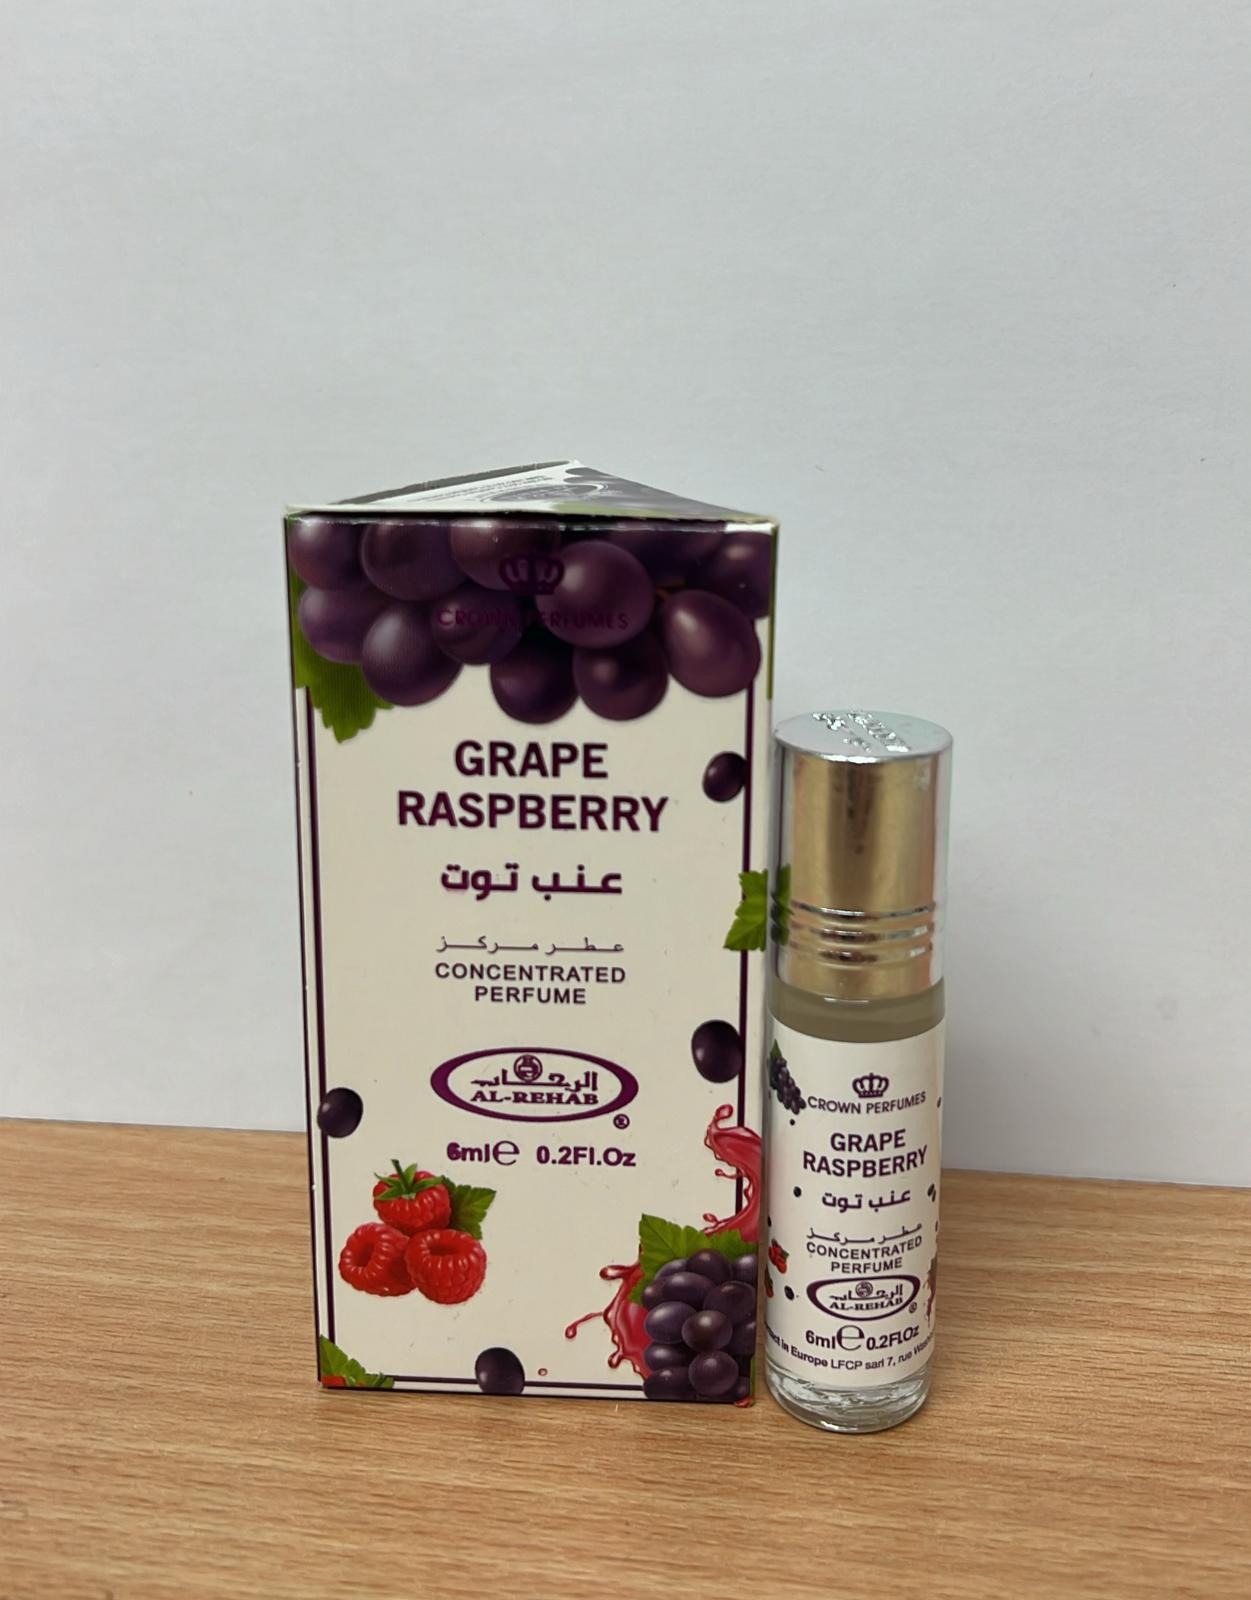 6ml - Ittar Grape Raspberry  (Al Rehab)